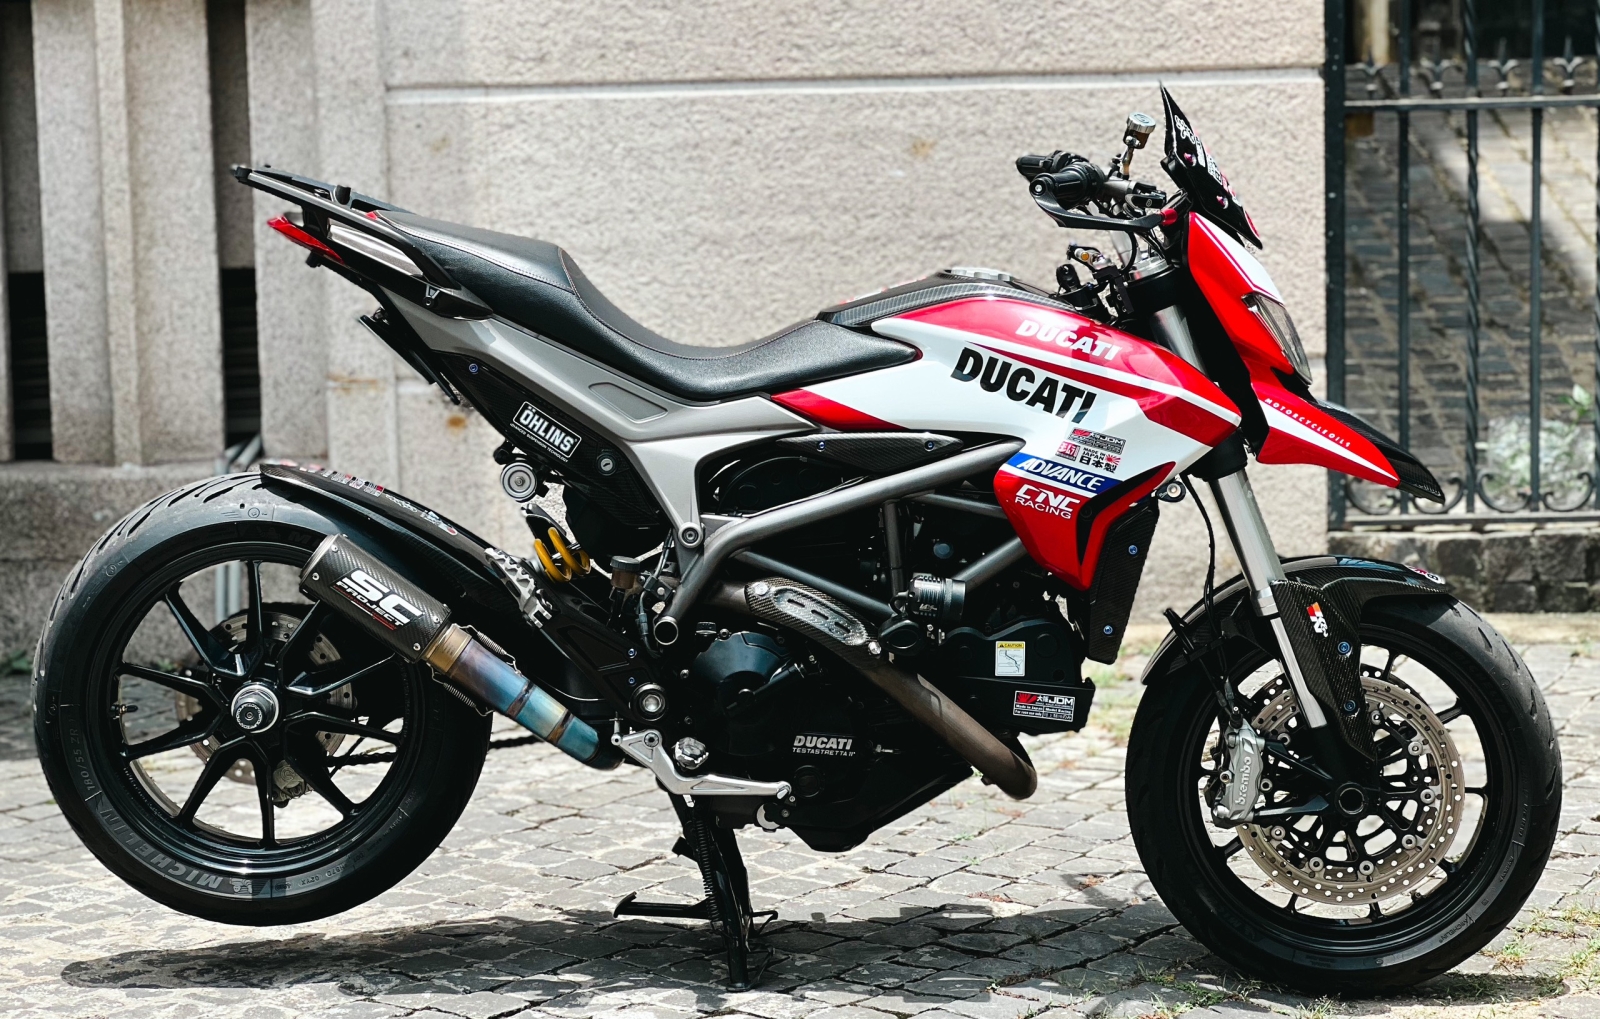 457 . Ducati Hyperstrada 821 ABS model 2015